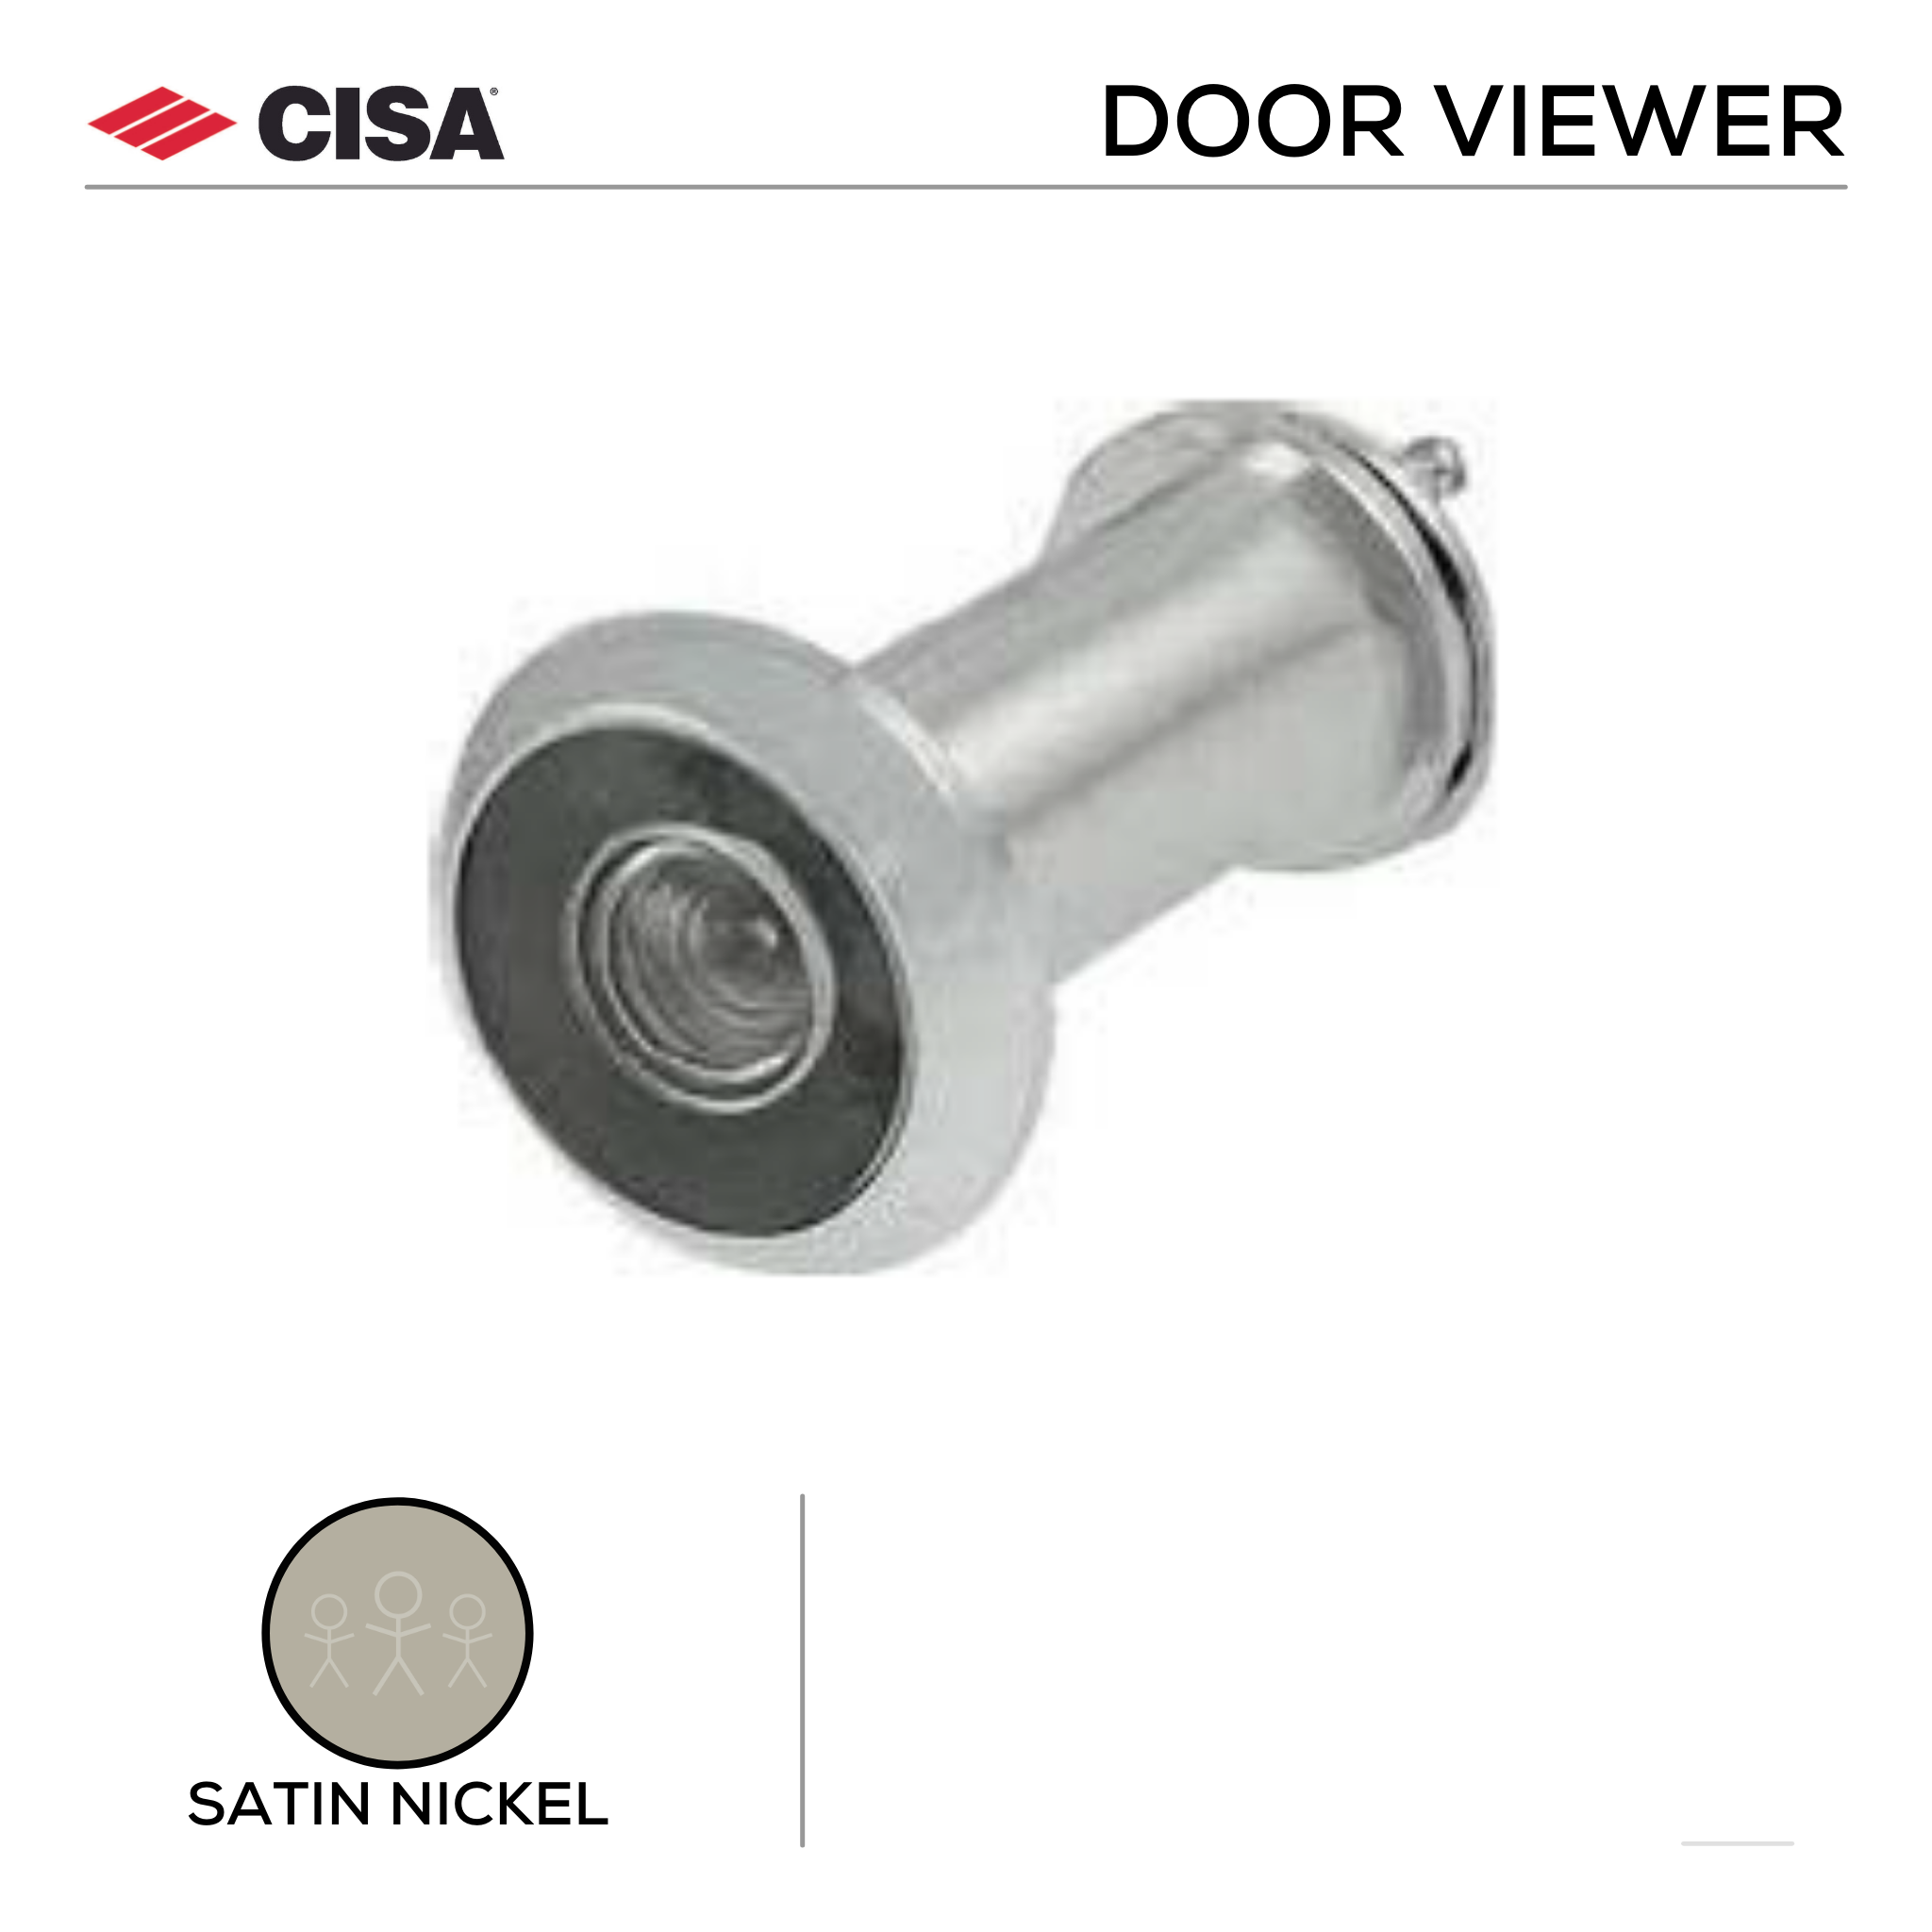 FDV1.SN, Door Viewer, 40-44mm (l), 180º View, Satin Nickel, CISA